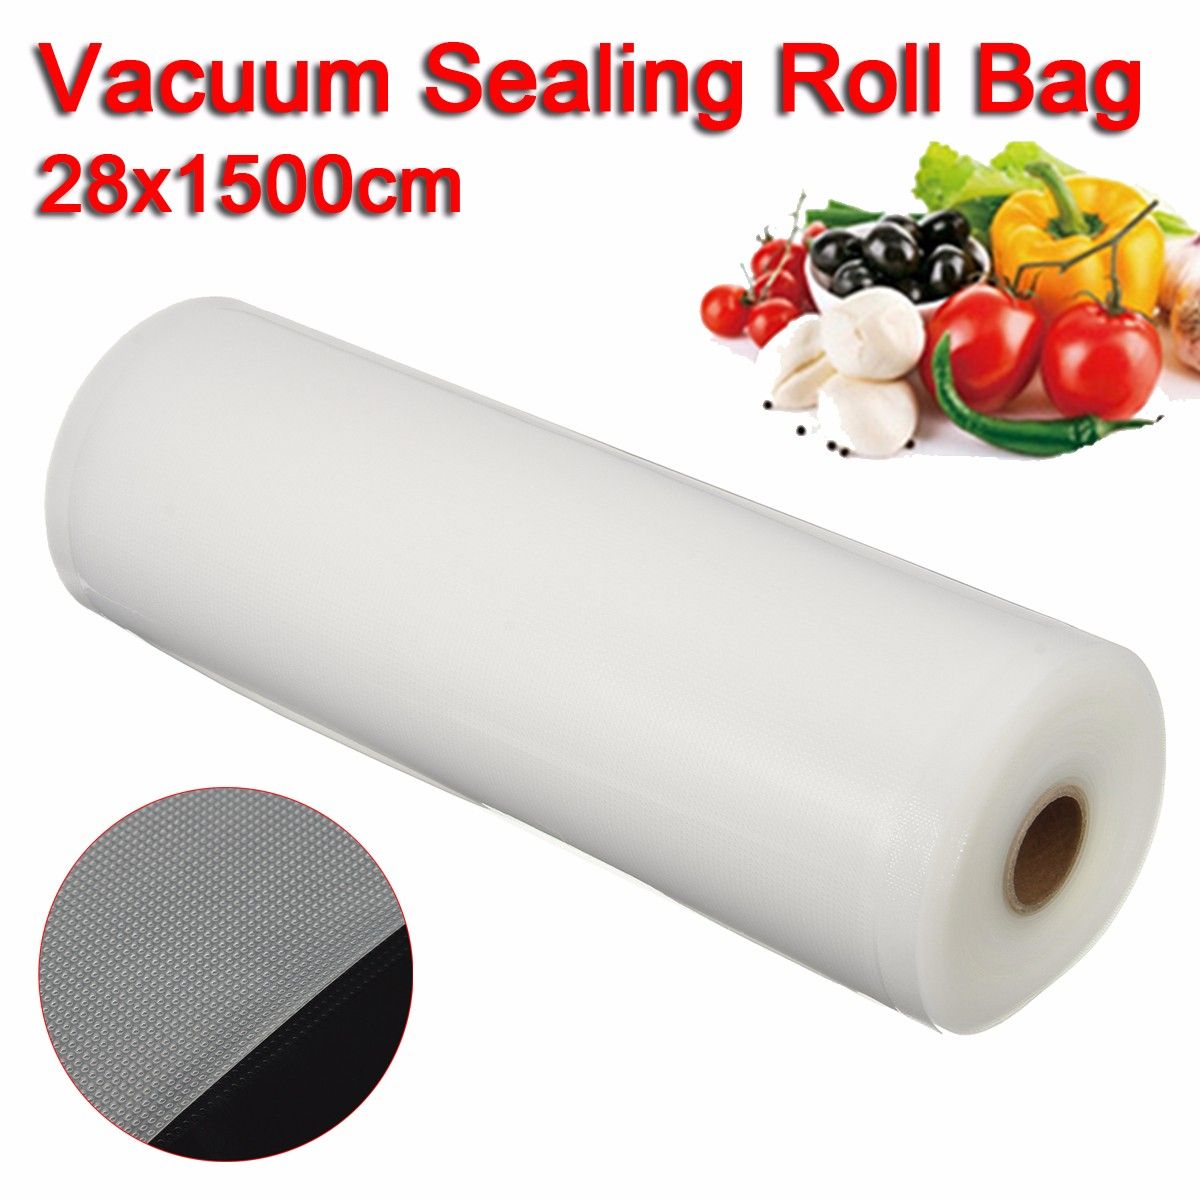 Big-Size-28x1500cm-Vacuum-Sealing-Roll-Bag-Storage-Food-Saver-Kitchen-Plastic-Heat-Seal-Bags-Freeze-1255209